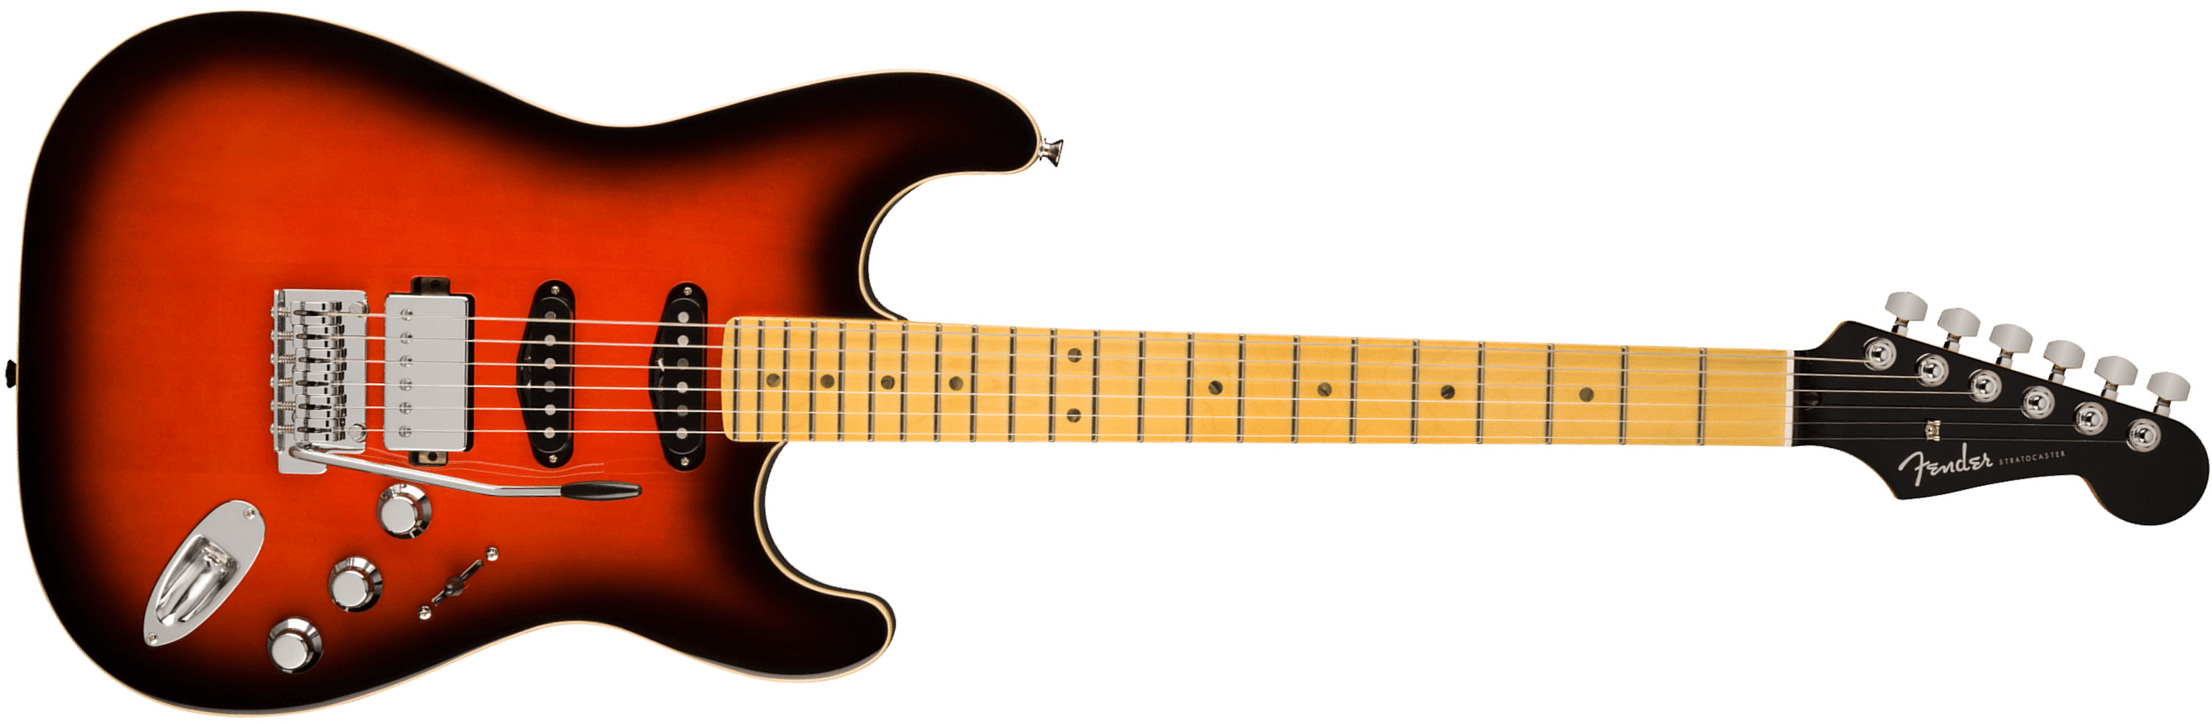 Fender Strat Aerodyne Special Jap Trem Hss Mn - Hot Rod Burst - Str shape electric guitar - Main picture